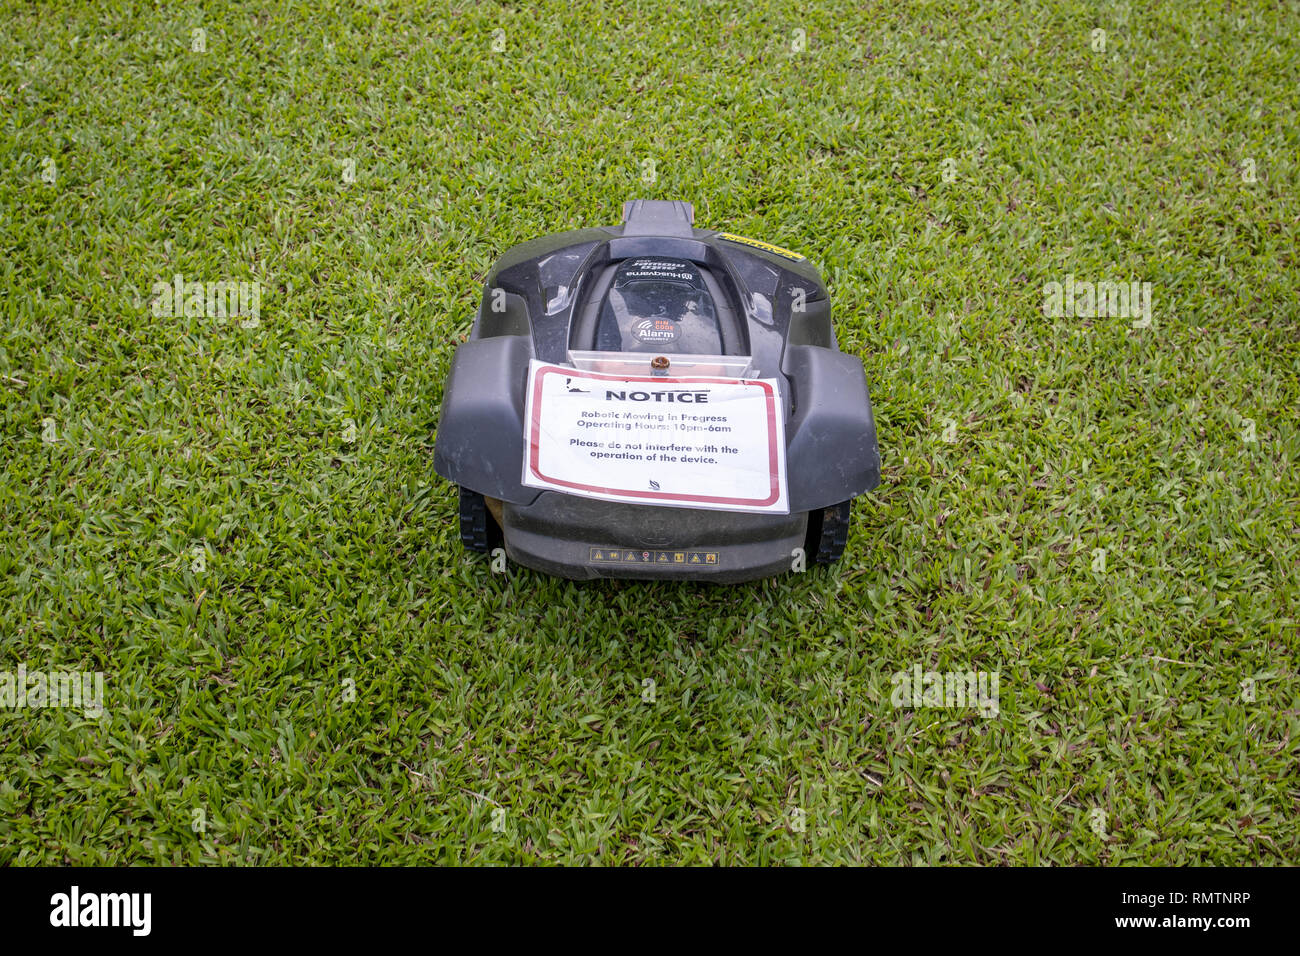 husqvarna robot lawn mower in a public park in Singapore Stock Photo